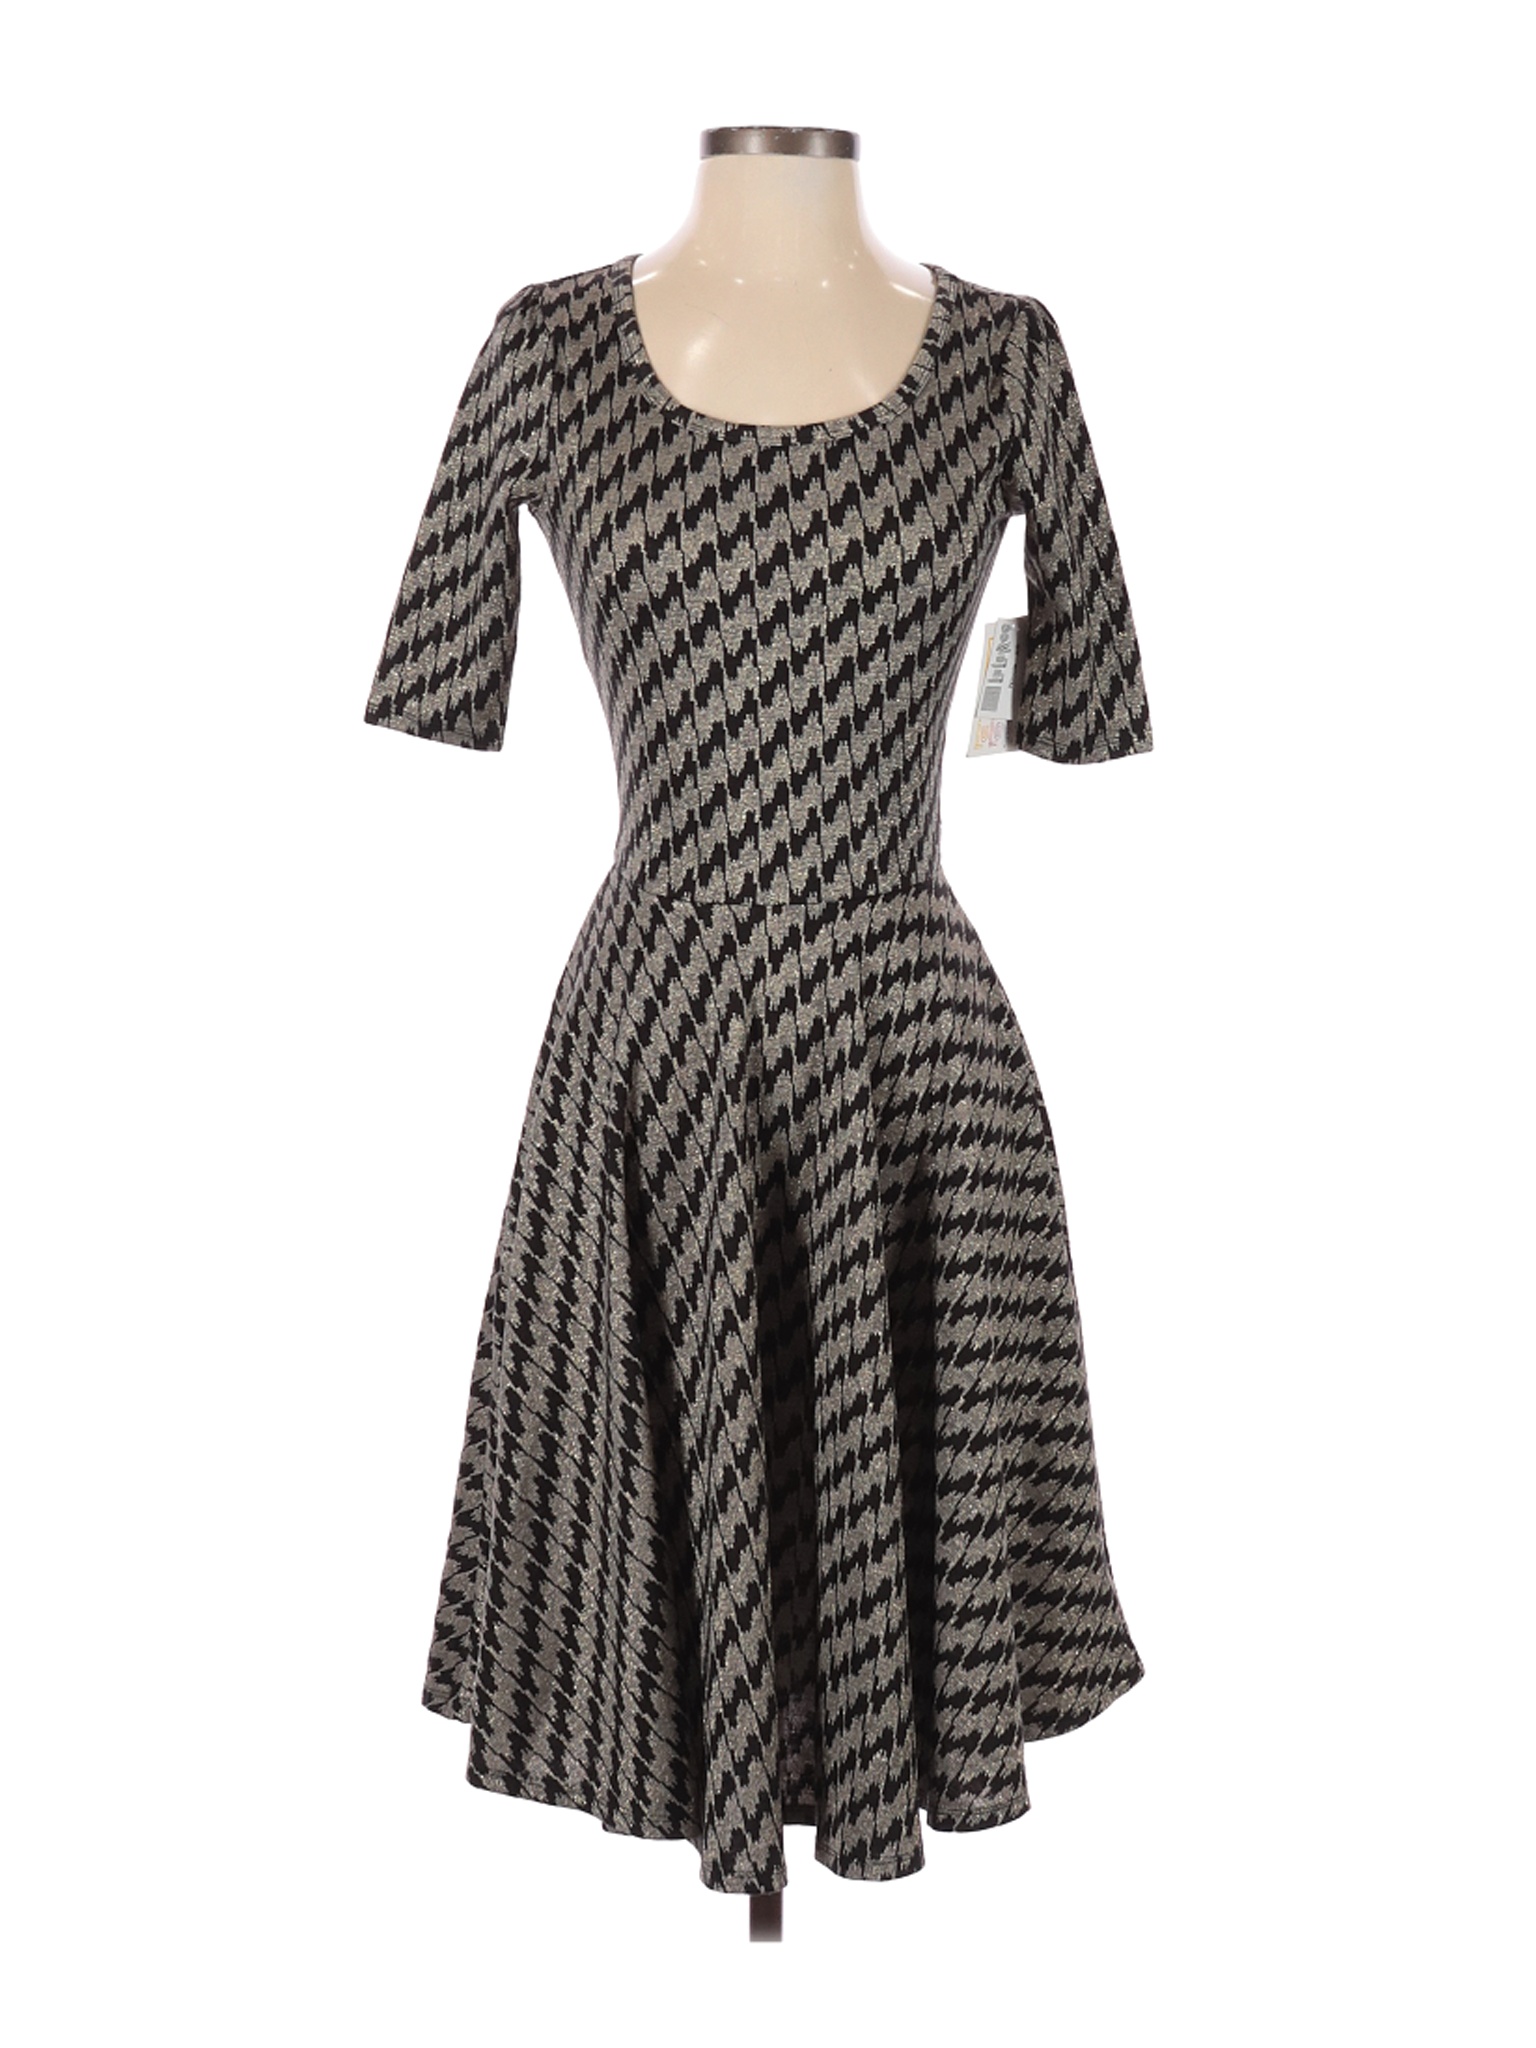 NWT Lularoe Women Black Casual Dress XS | eBay